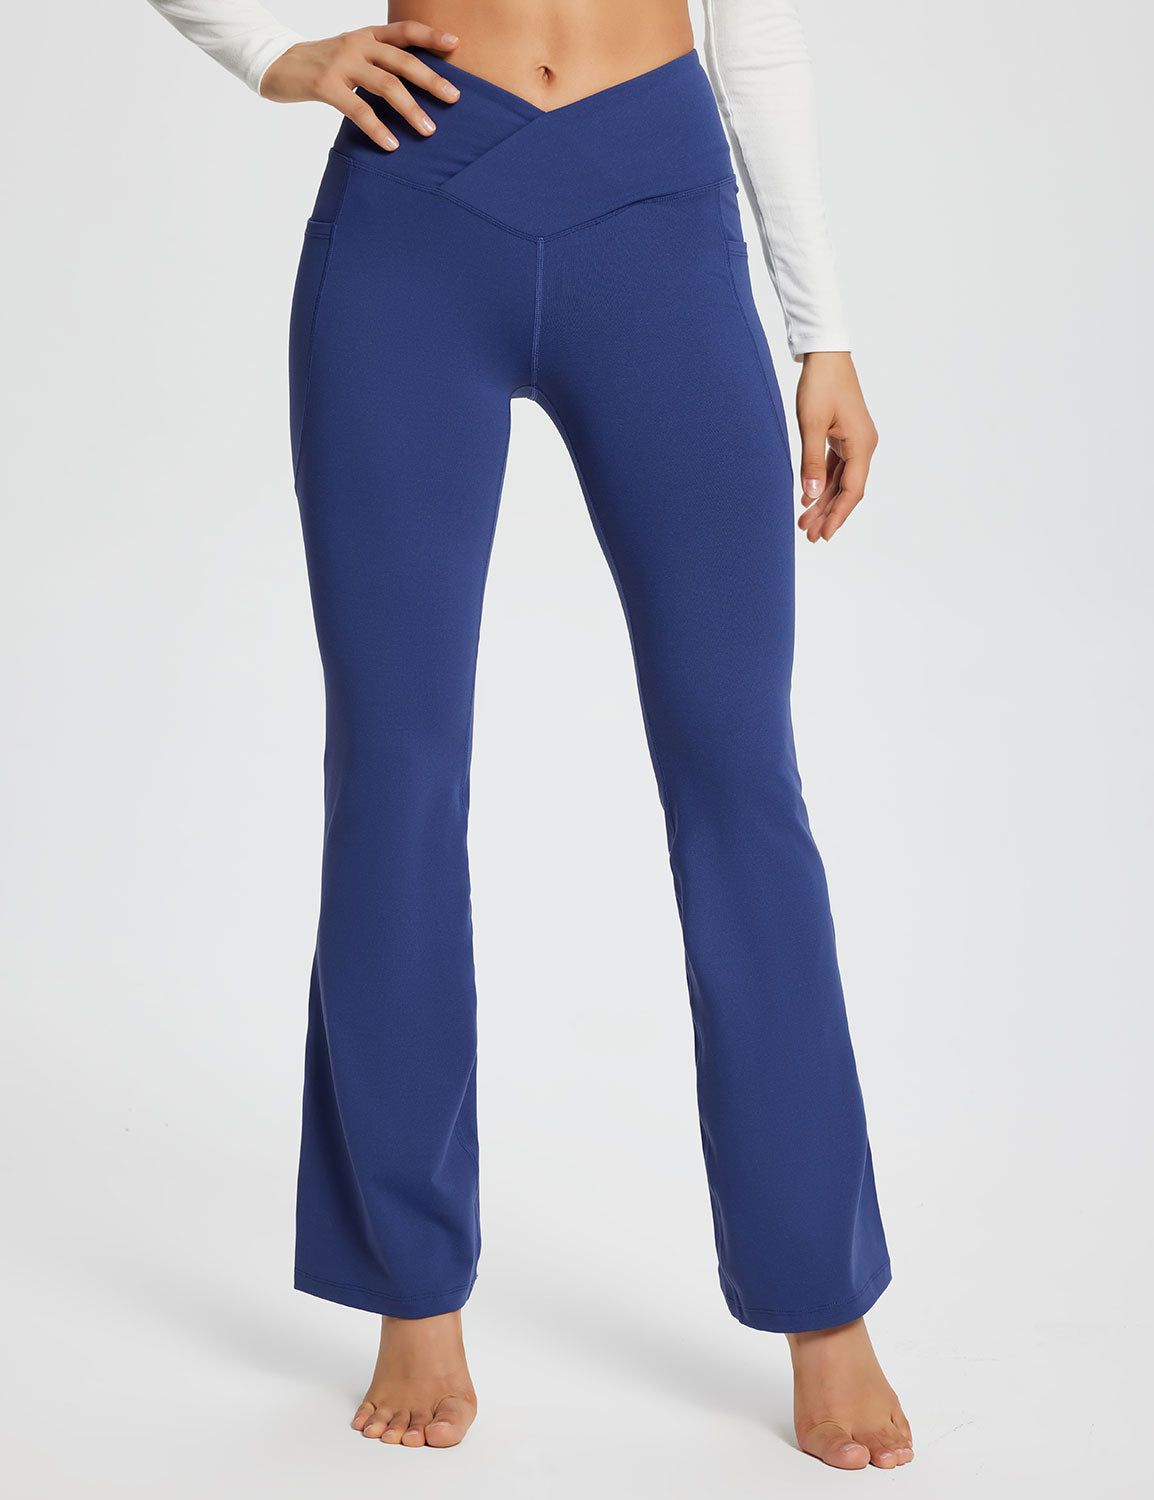 Baleaf Sports Solid Navy Blue Active Pants Size XL - 31% off